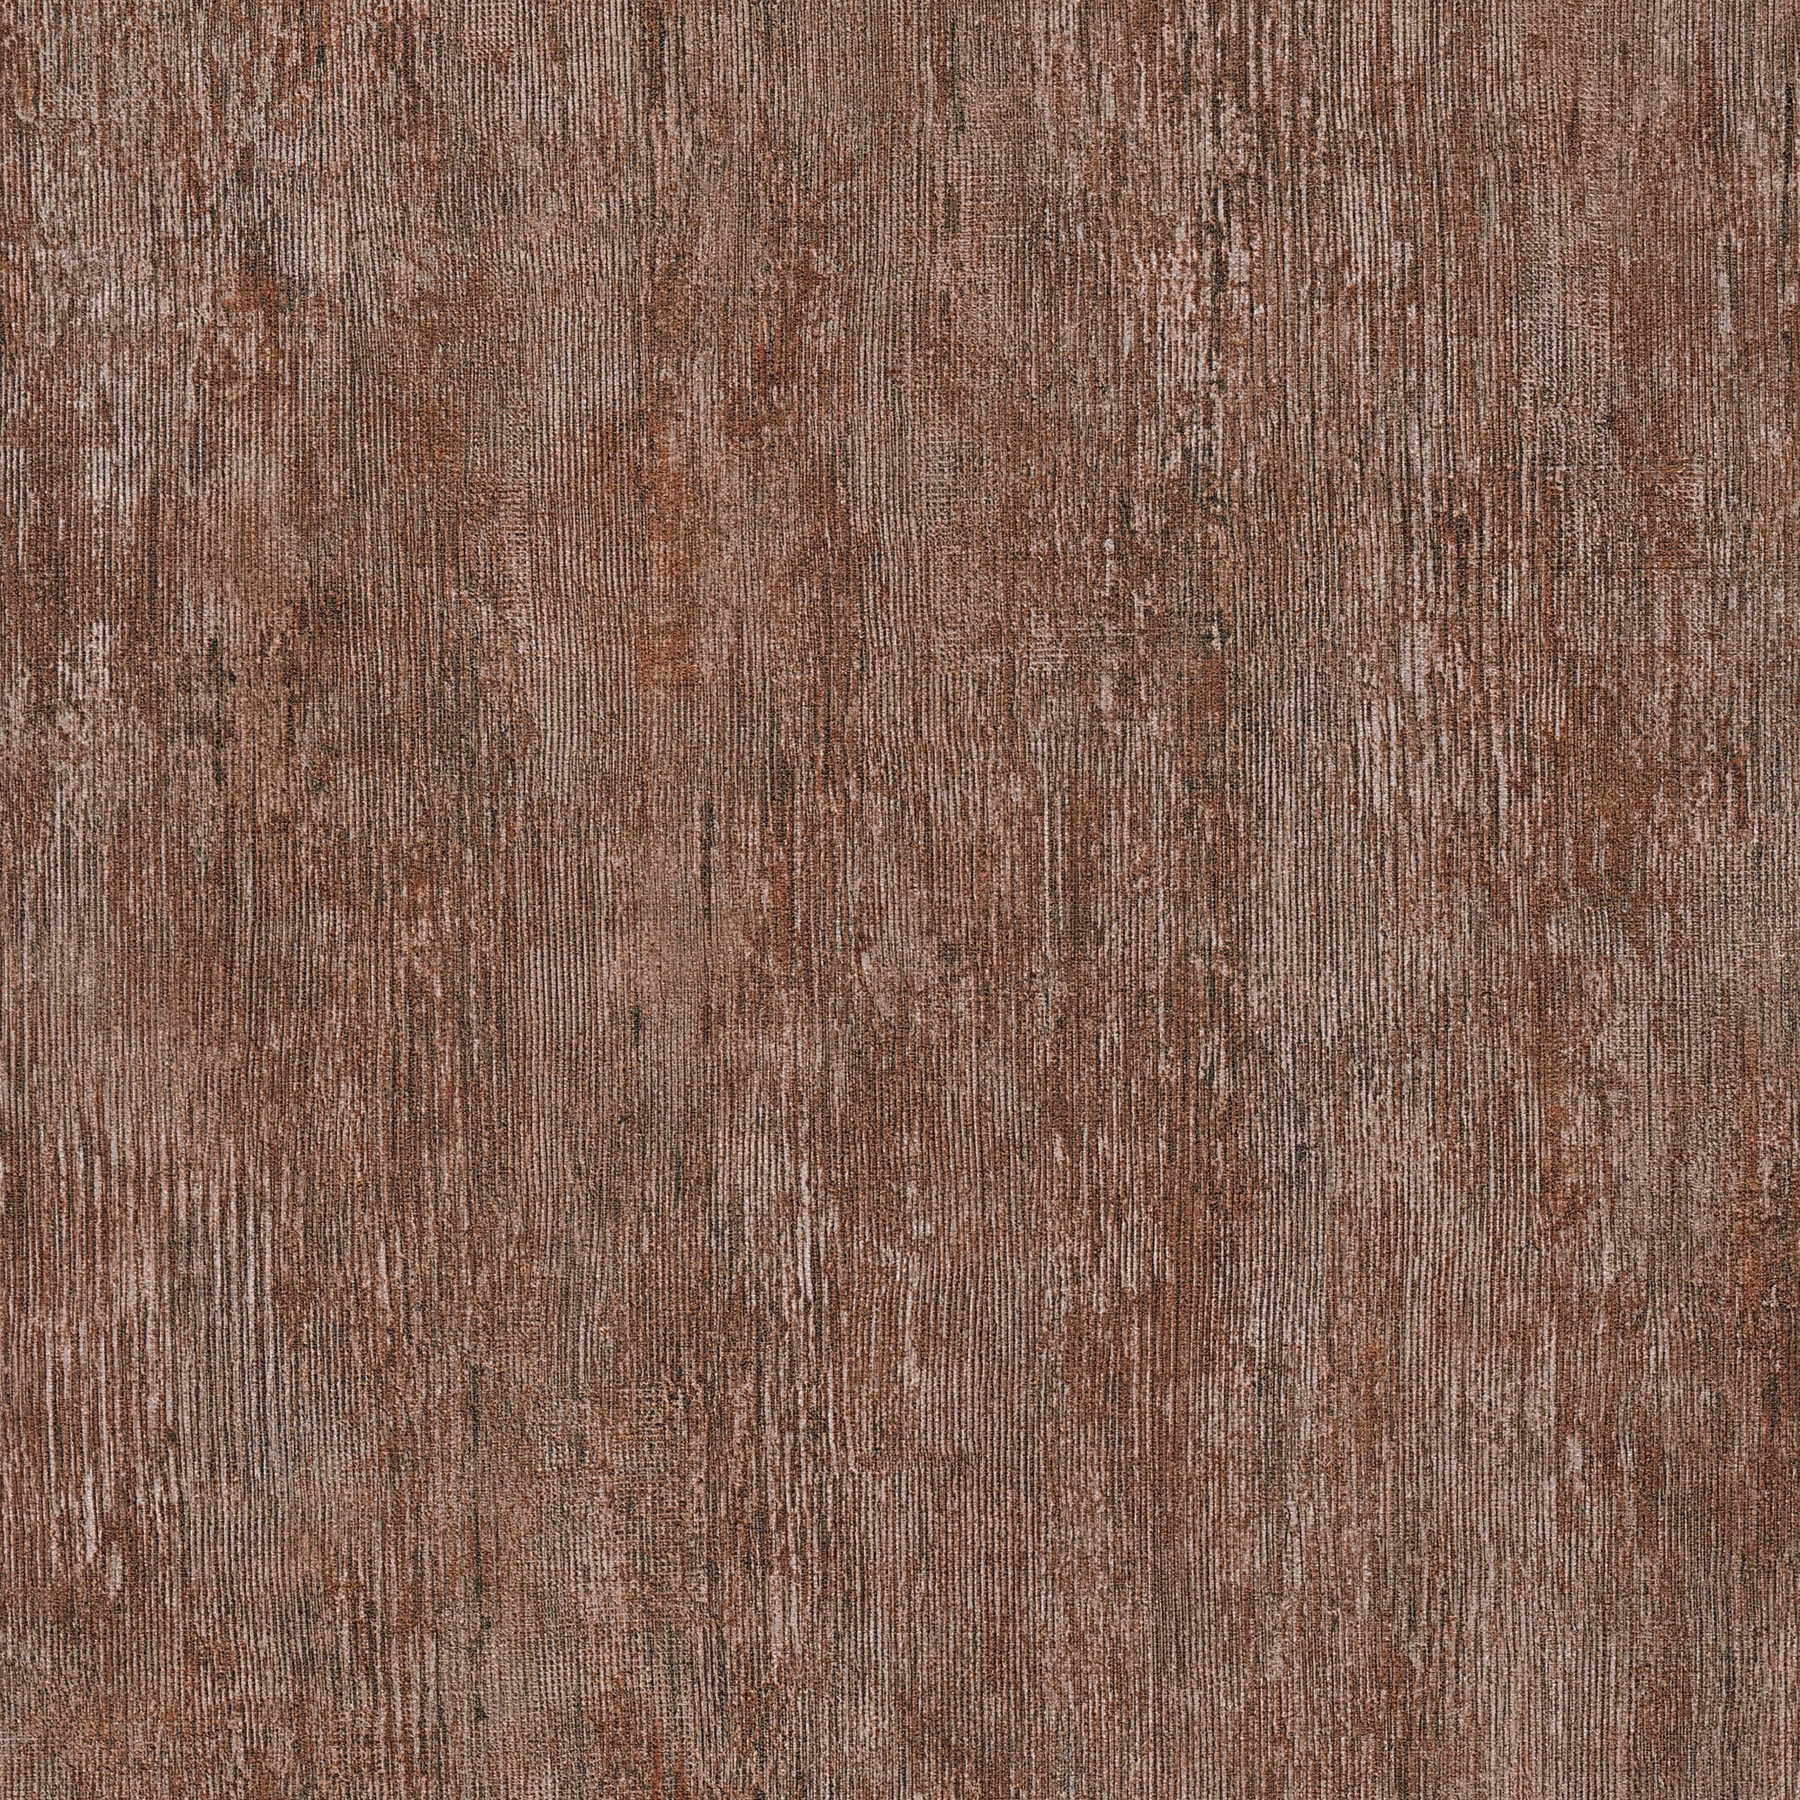 Rust wallpaper for industrial design - brown, red, grey
